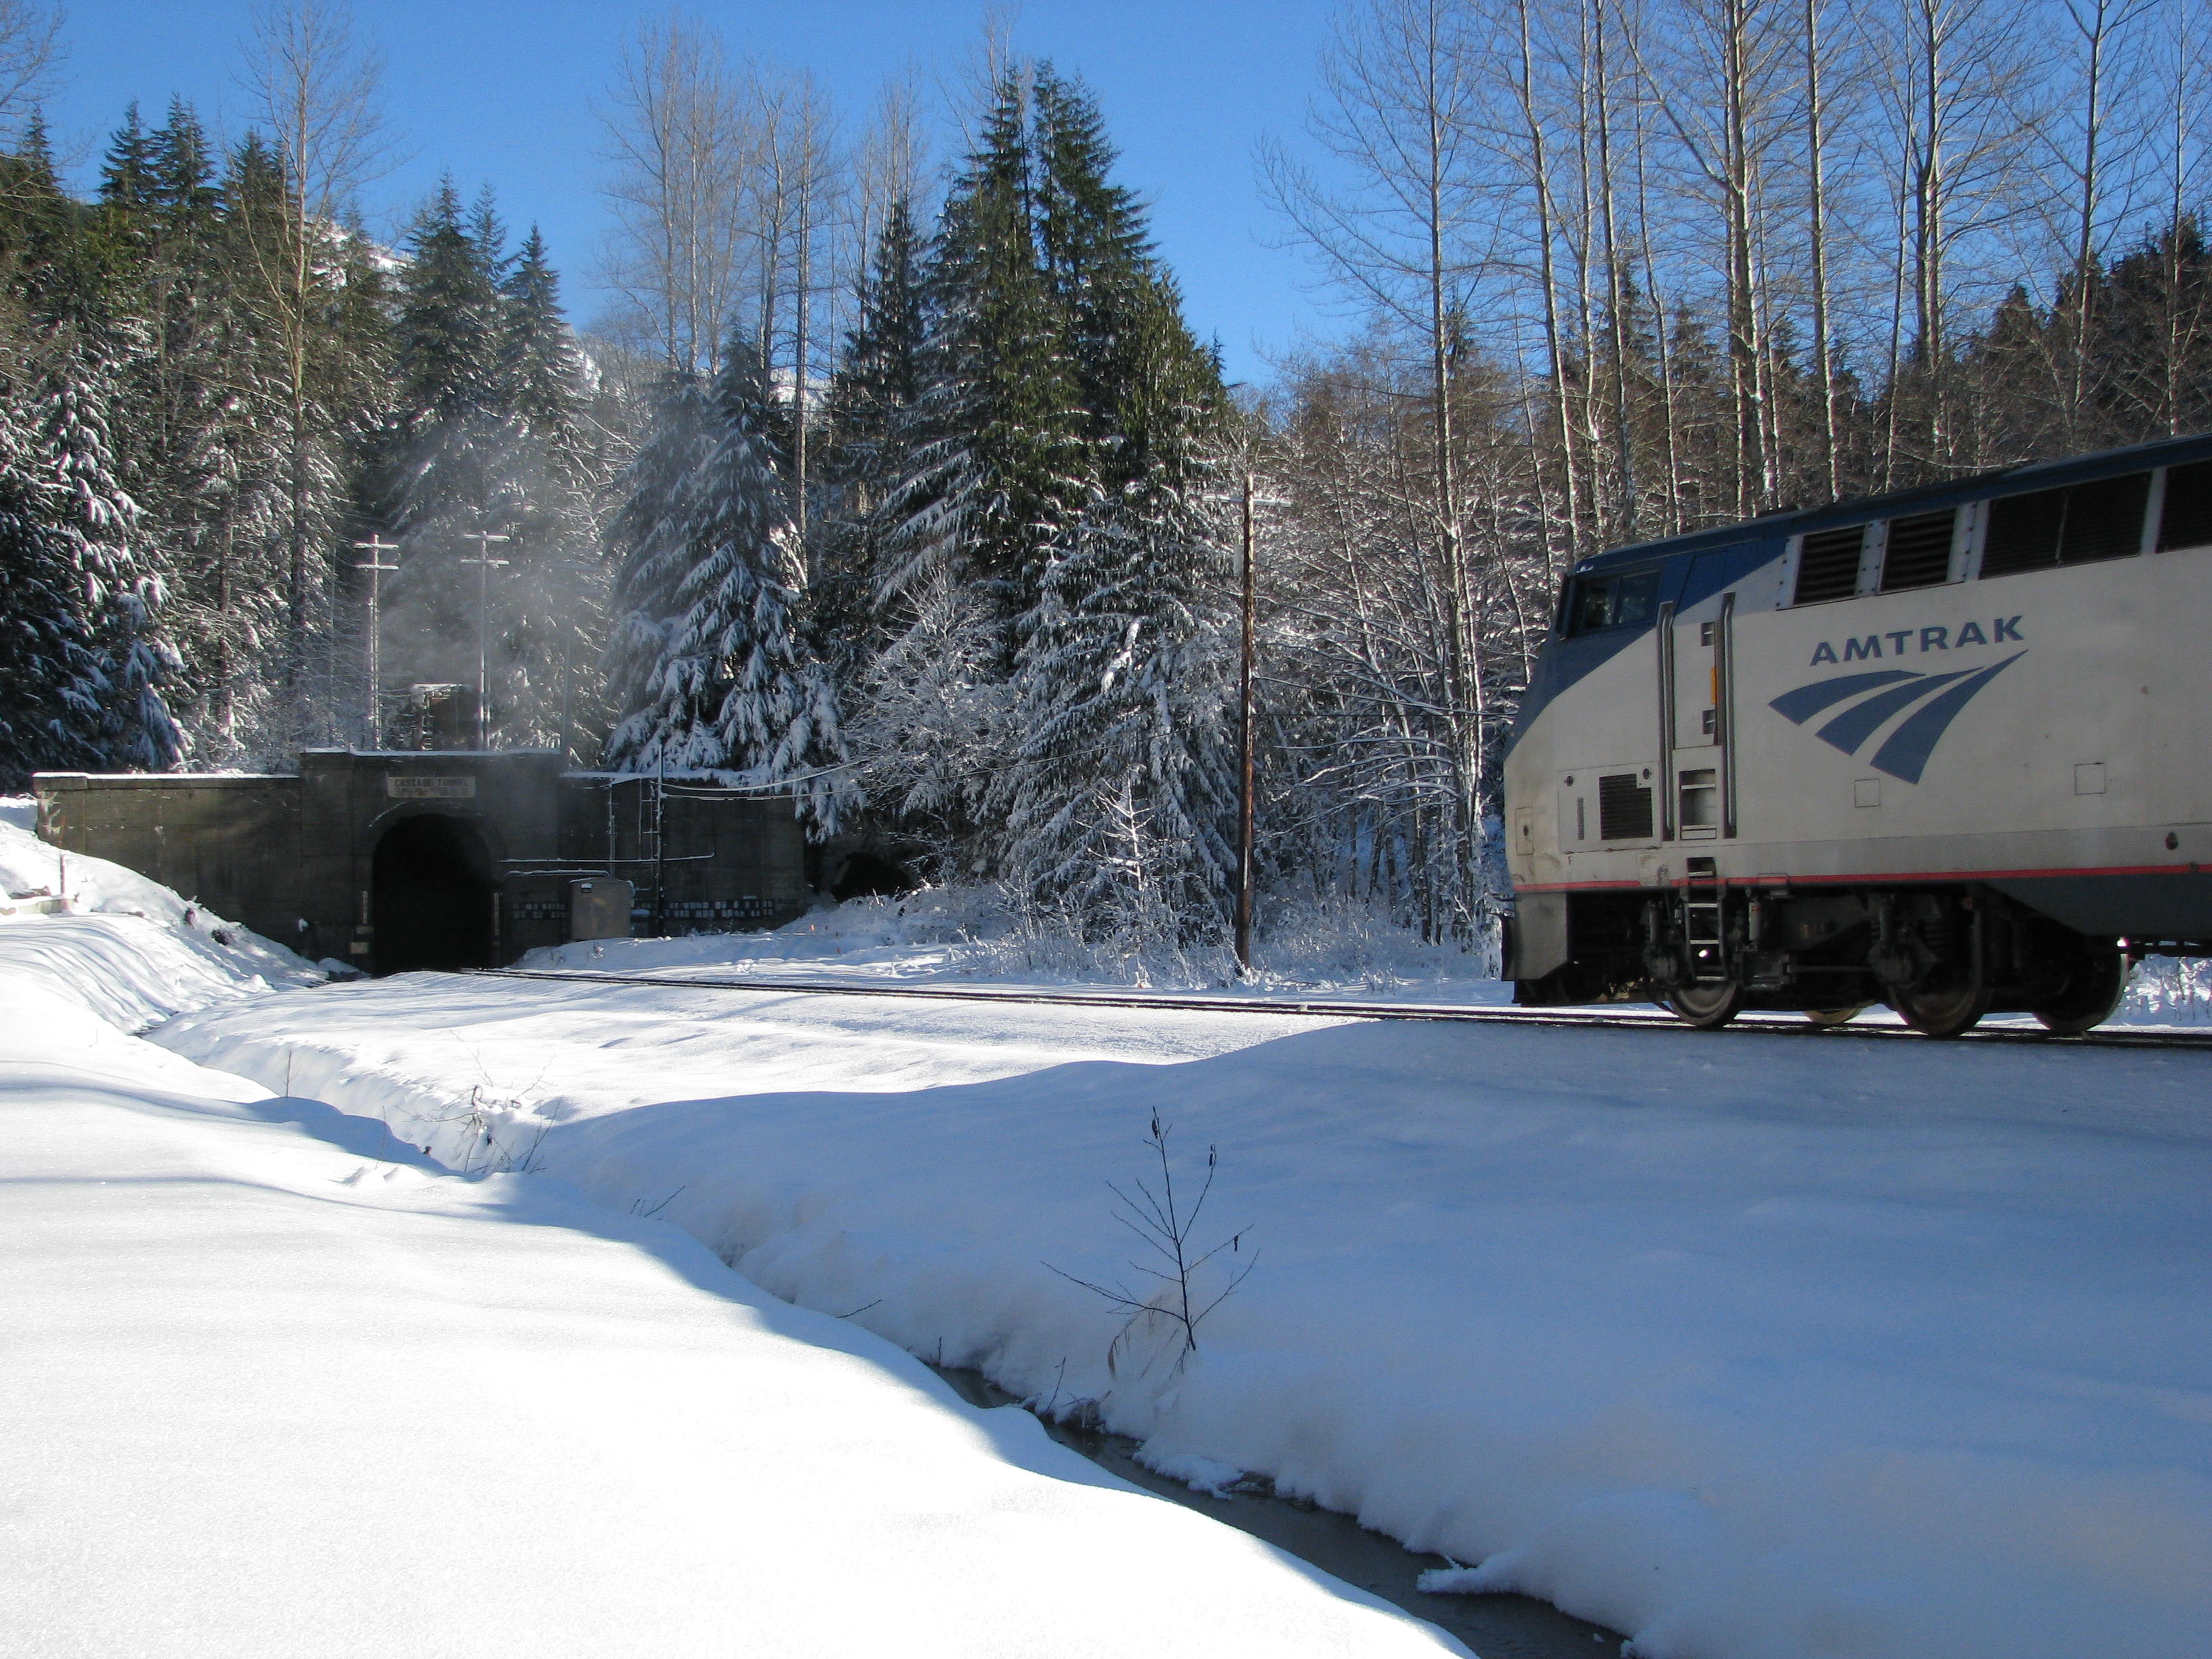 Amtrak train approaching Cascade Tunnel, 2013. Photo courtesy the Estate of Jim Hamre.